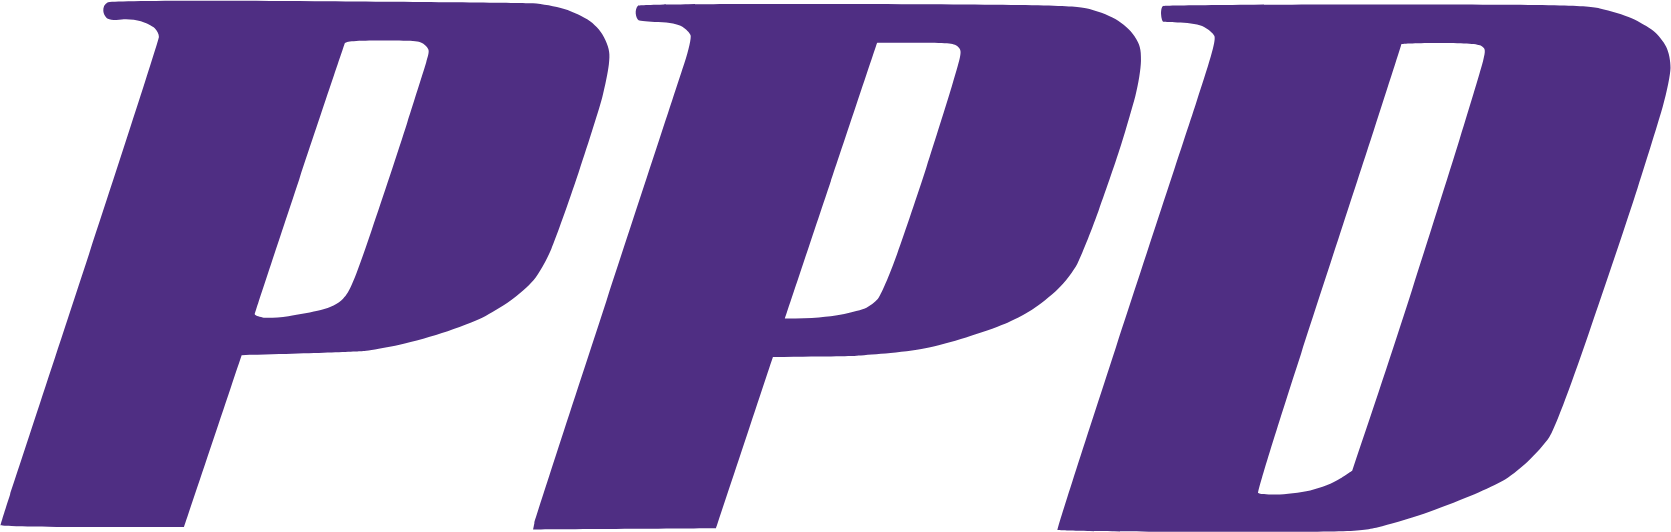 PPD logo (transparent PNG)